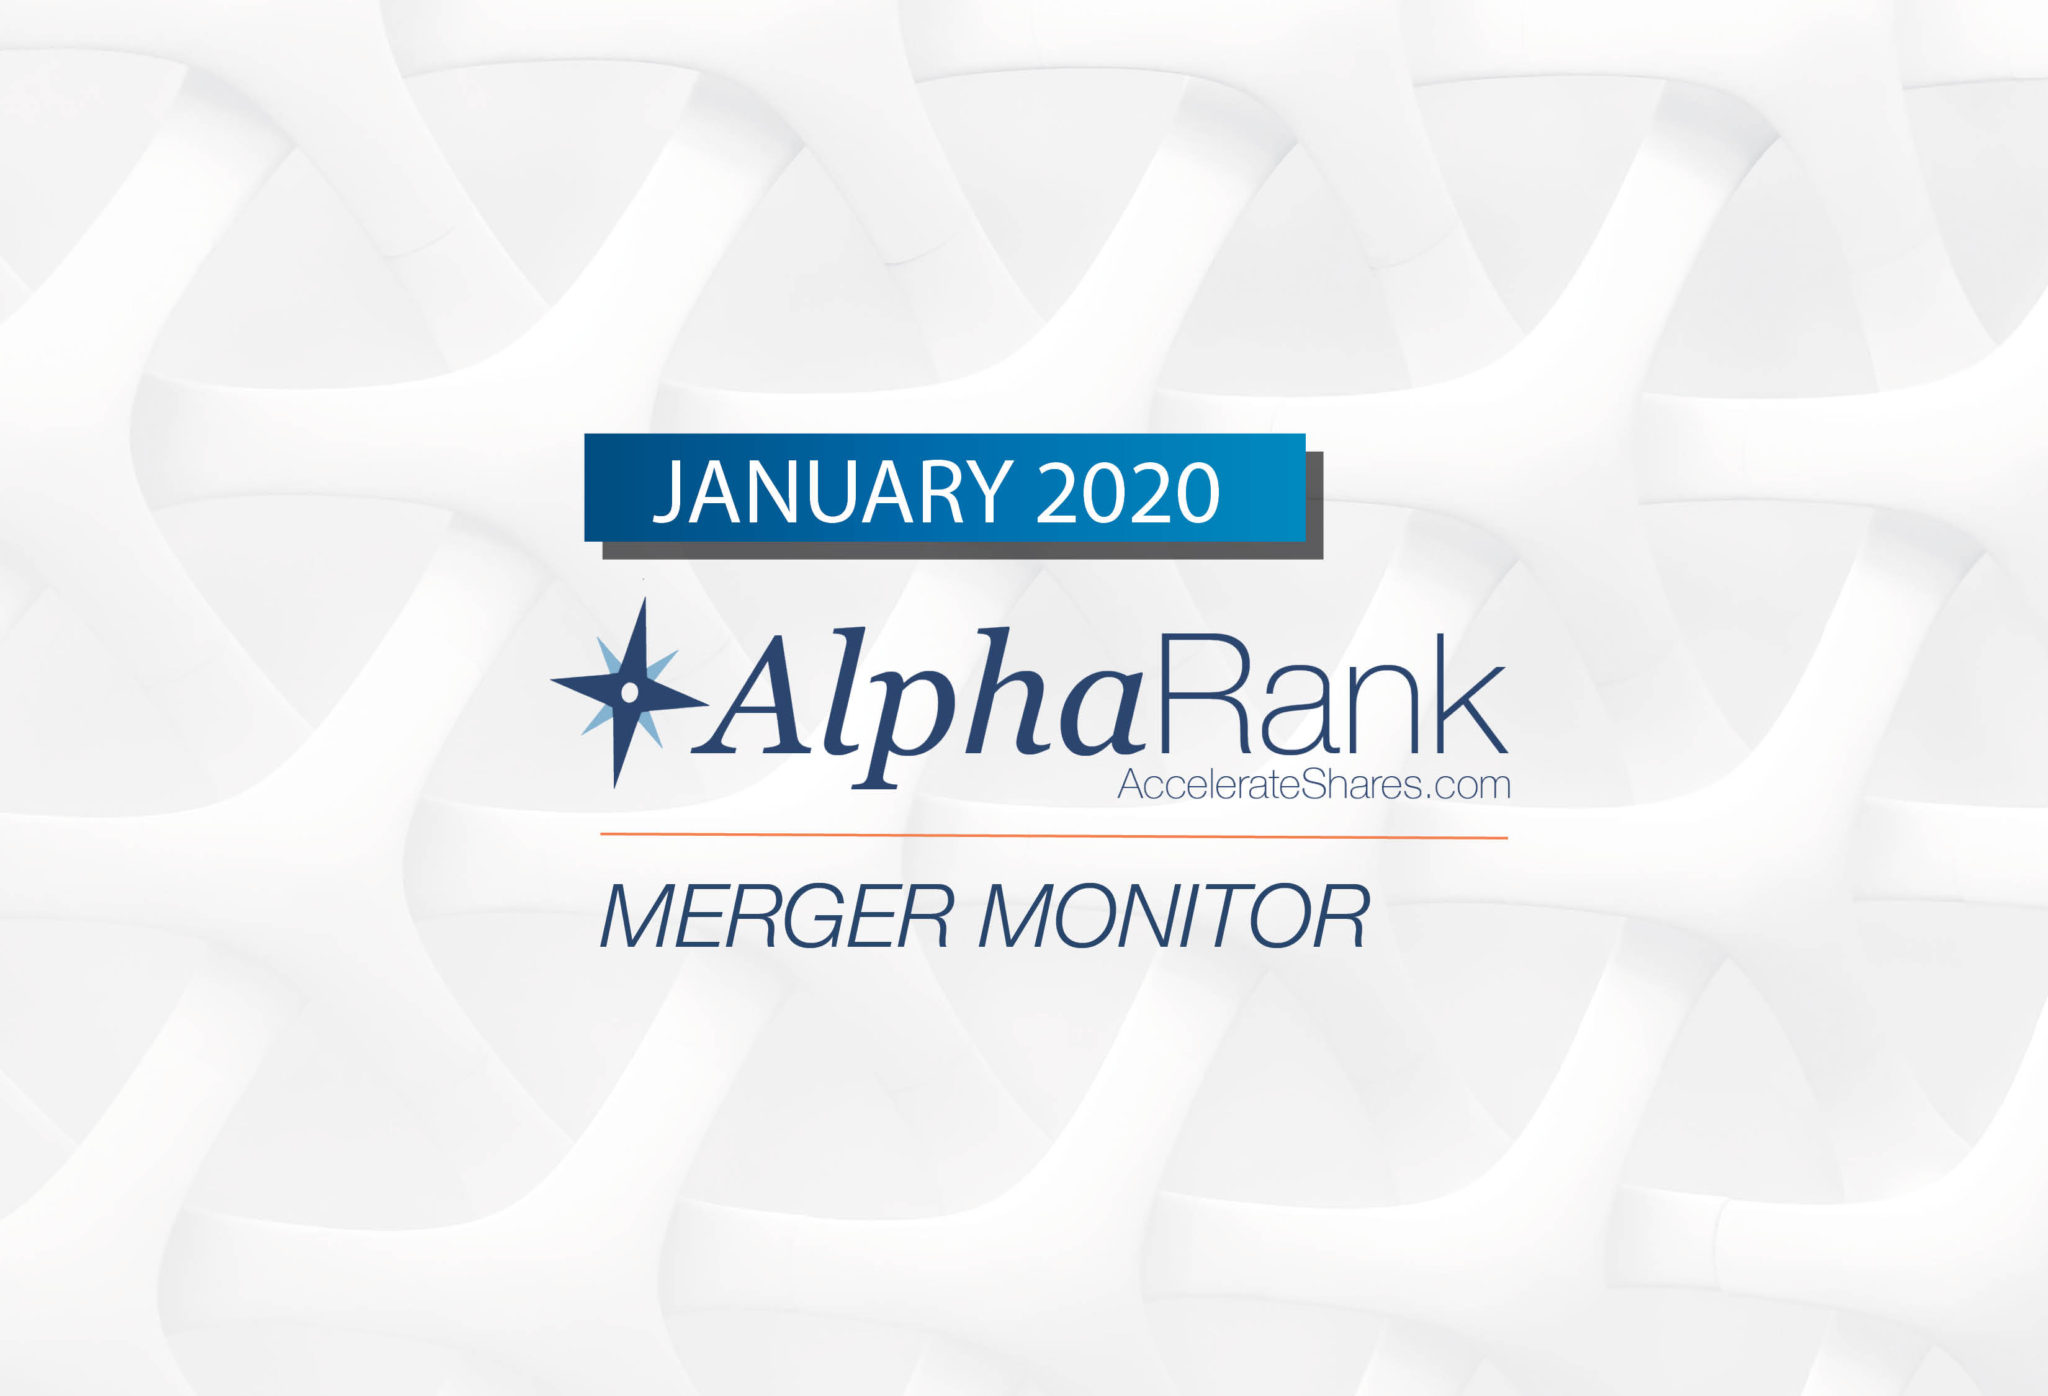 AlphaRank Merger Monitor—January 2020